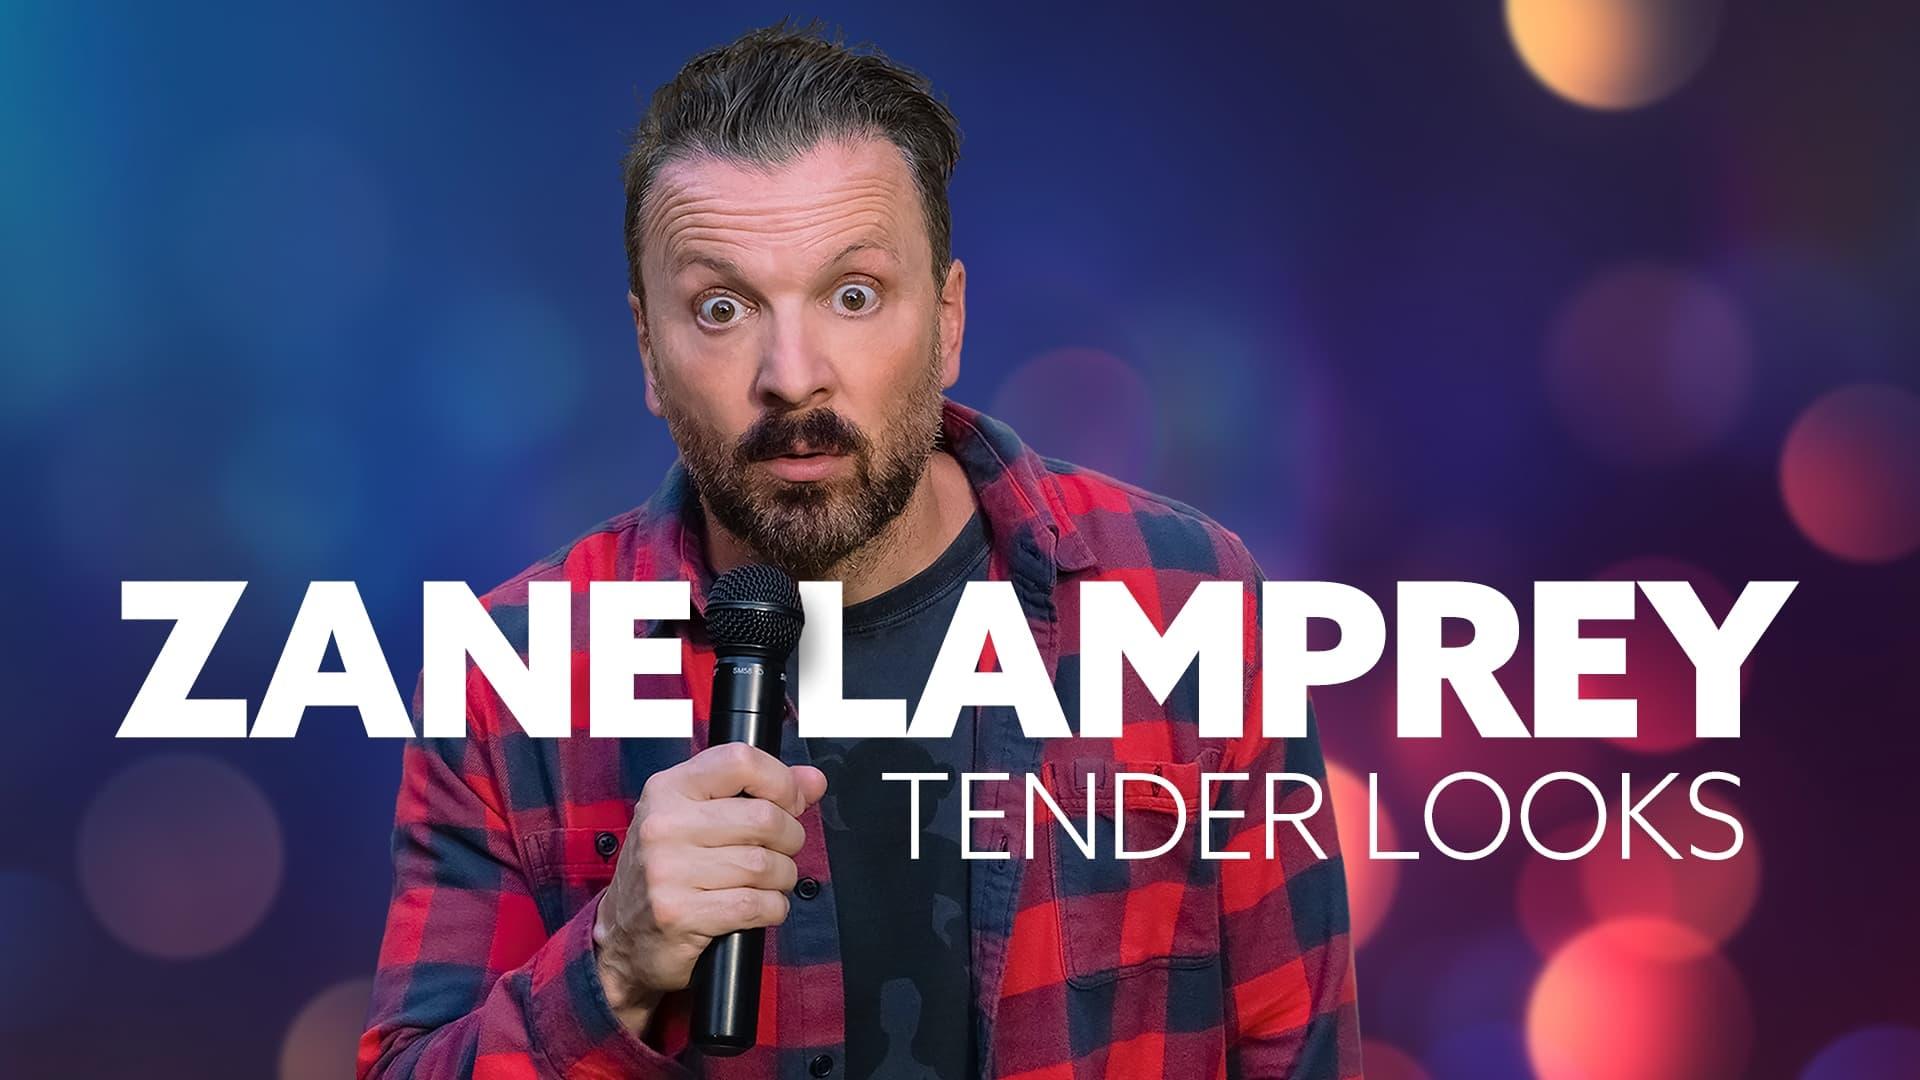 Zane Lamprey: Tender Looks backdrop